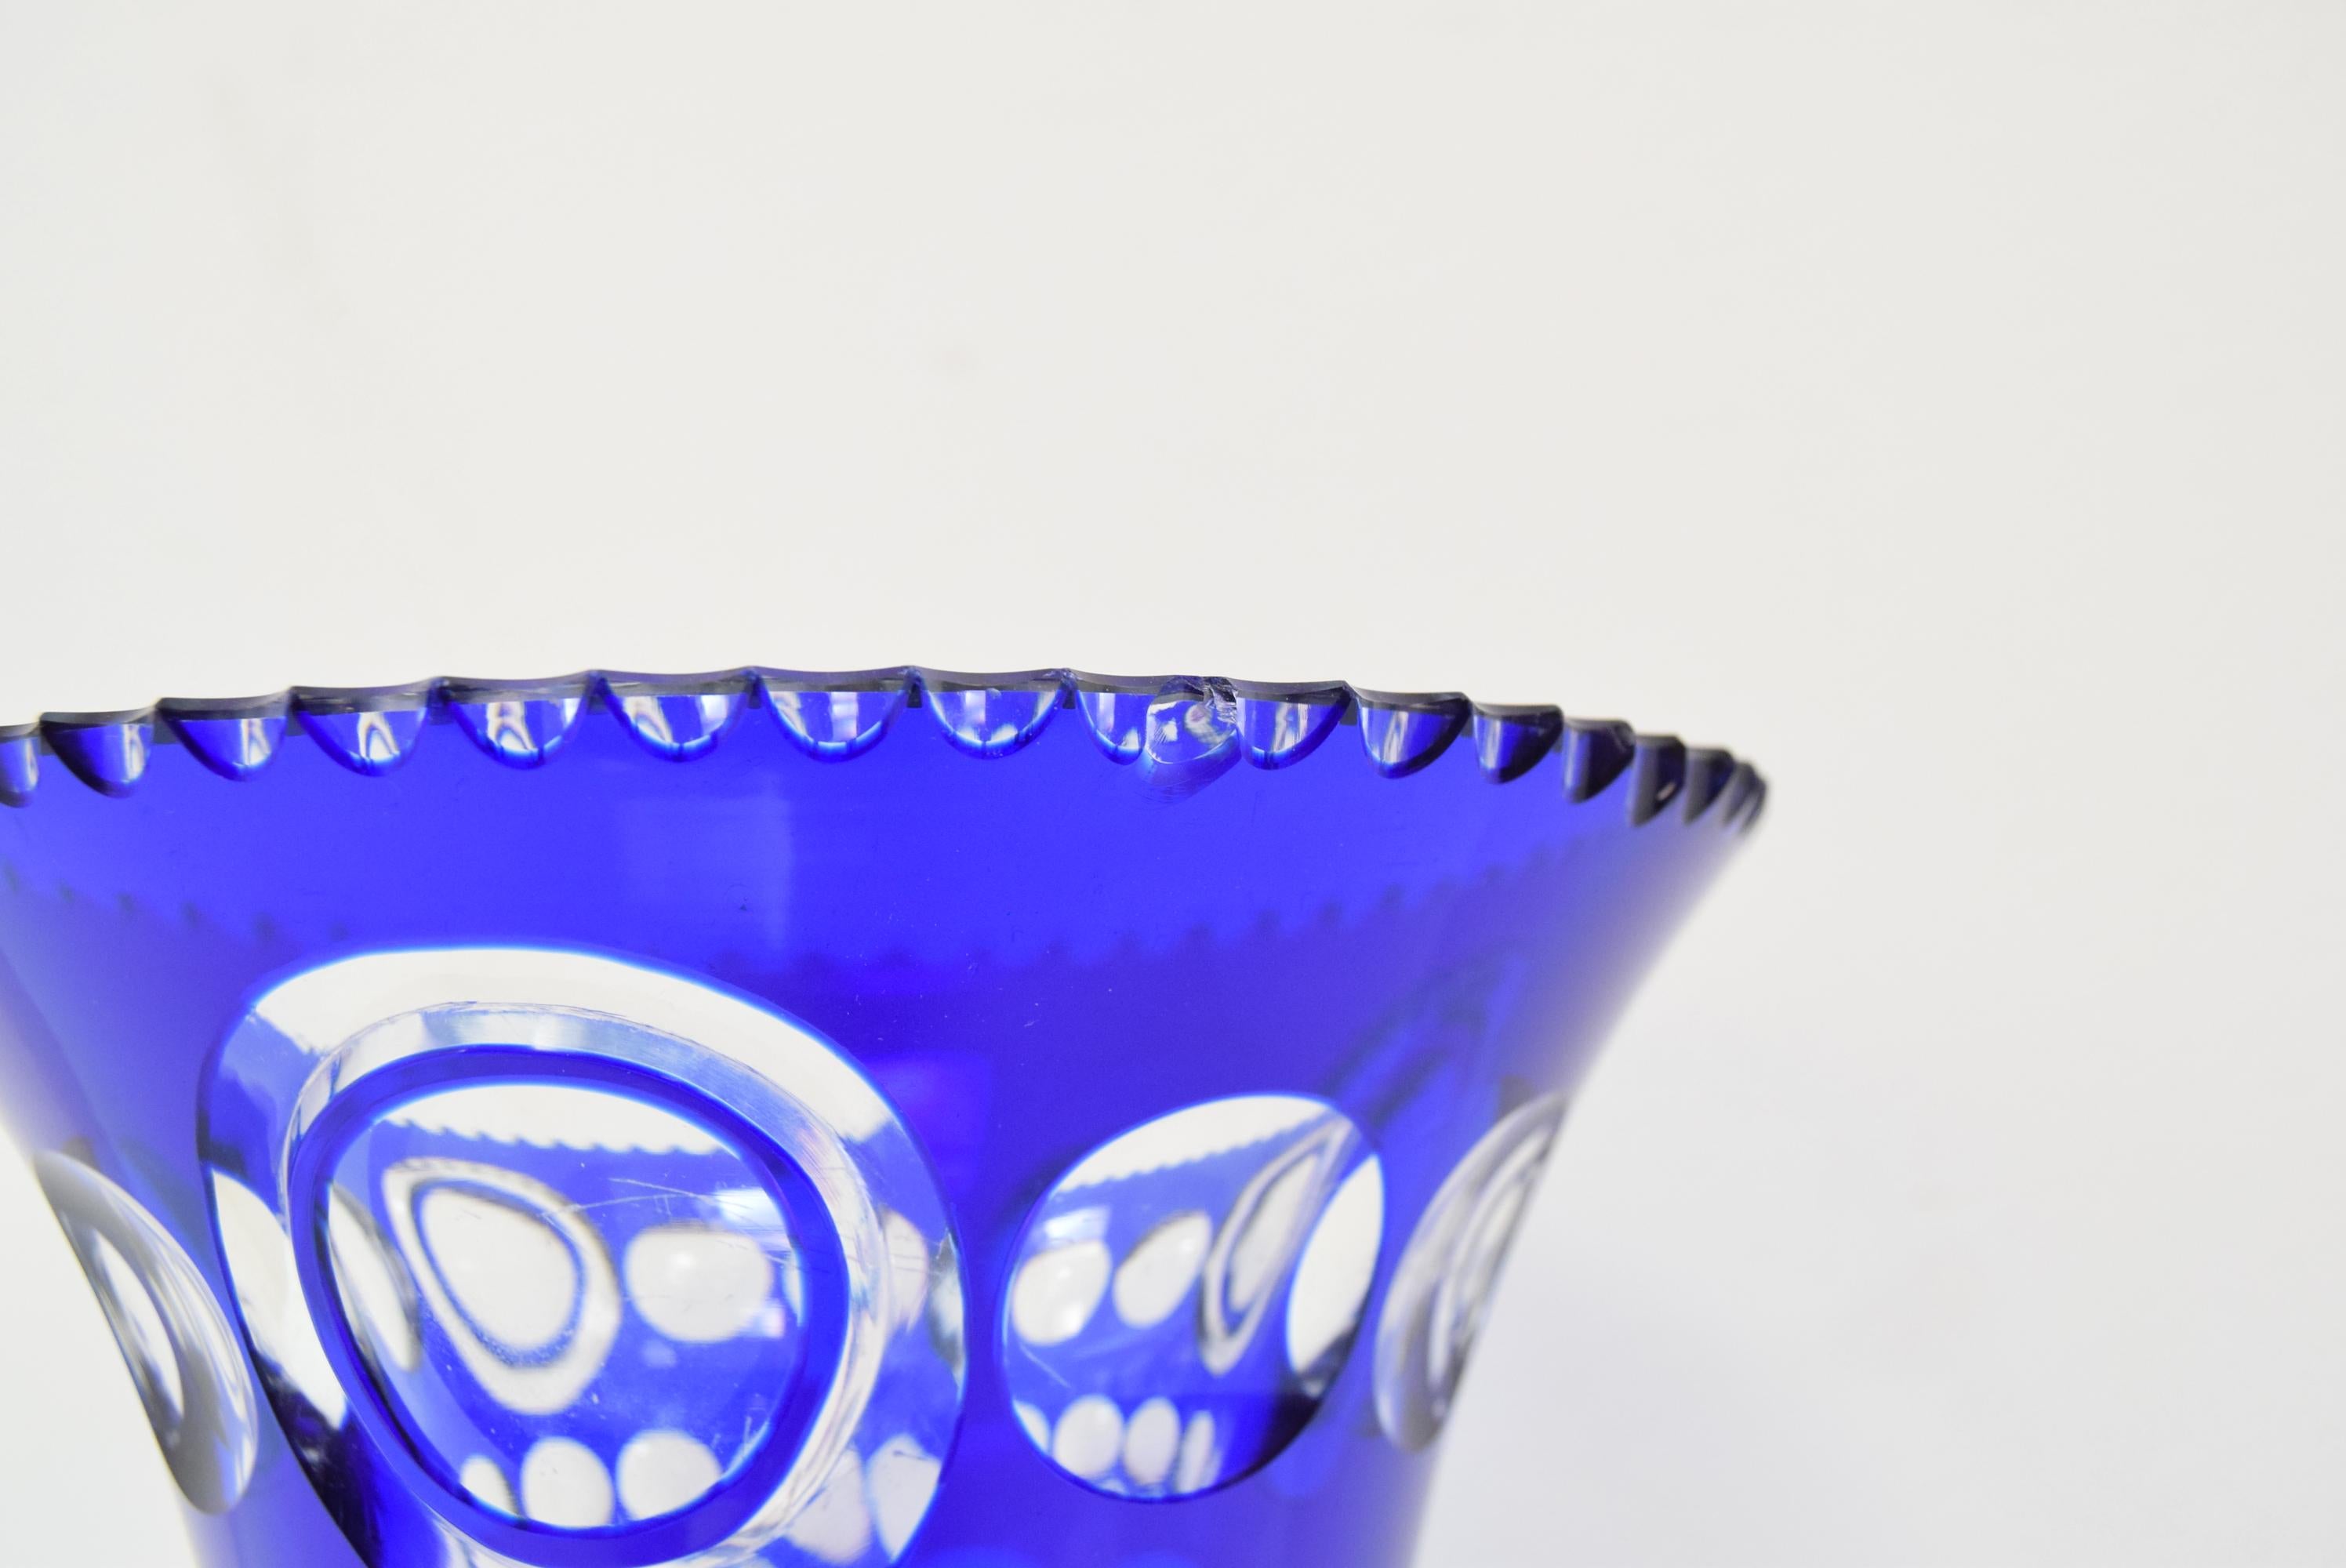 Hand Cut Lead Crystal Cobalt Blue Vase by Caesar Crystal Bohemiae Co, 1980s For Sale 3